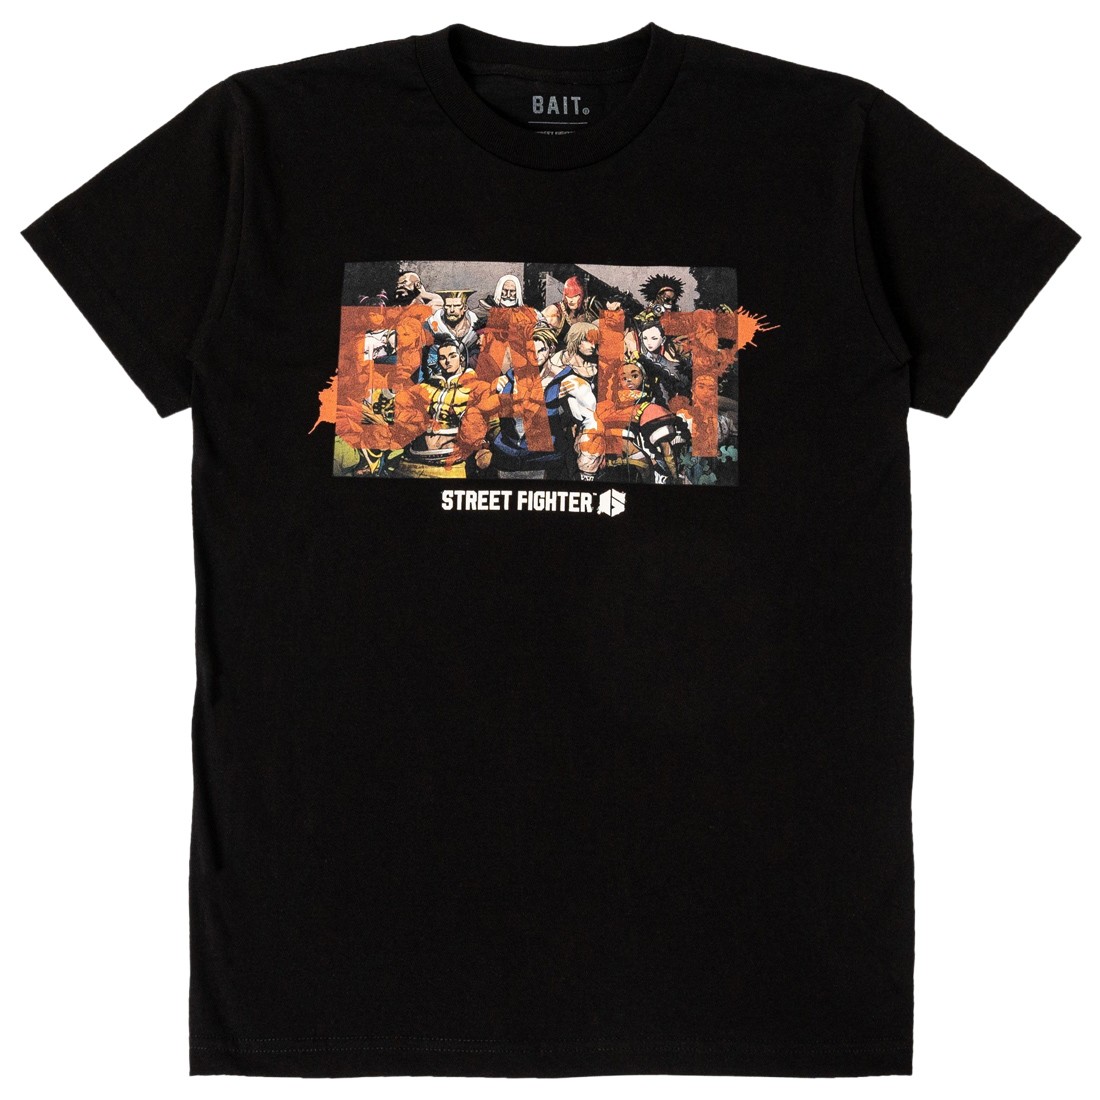 BAIT - Shop the new BAIT x Street Fighter apparel